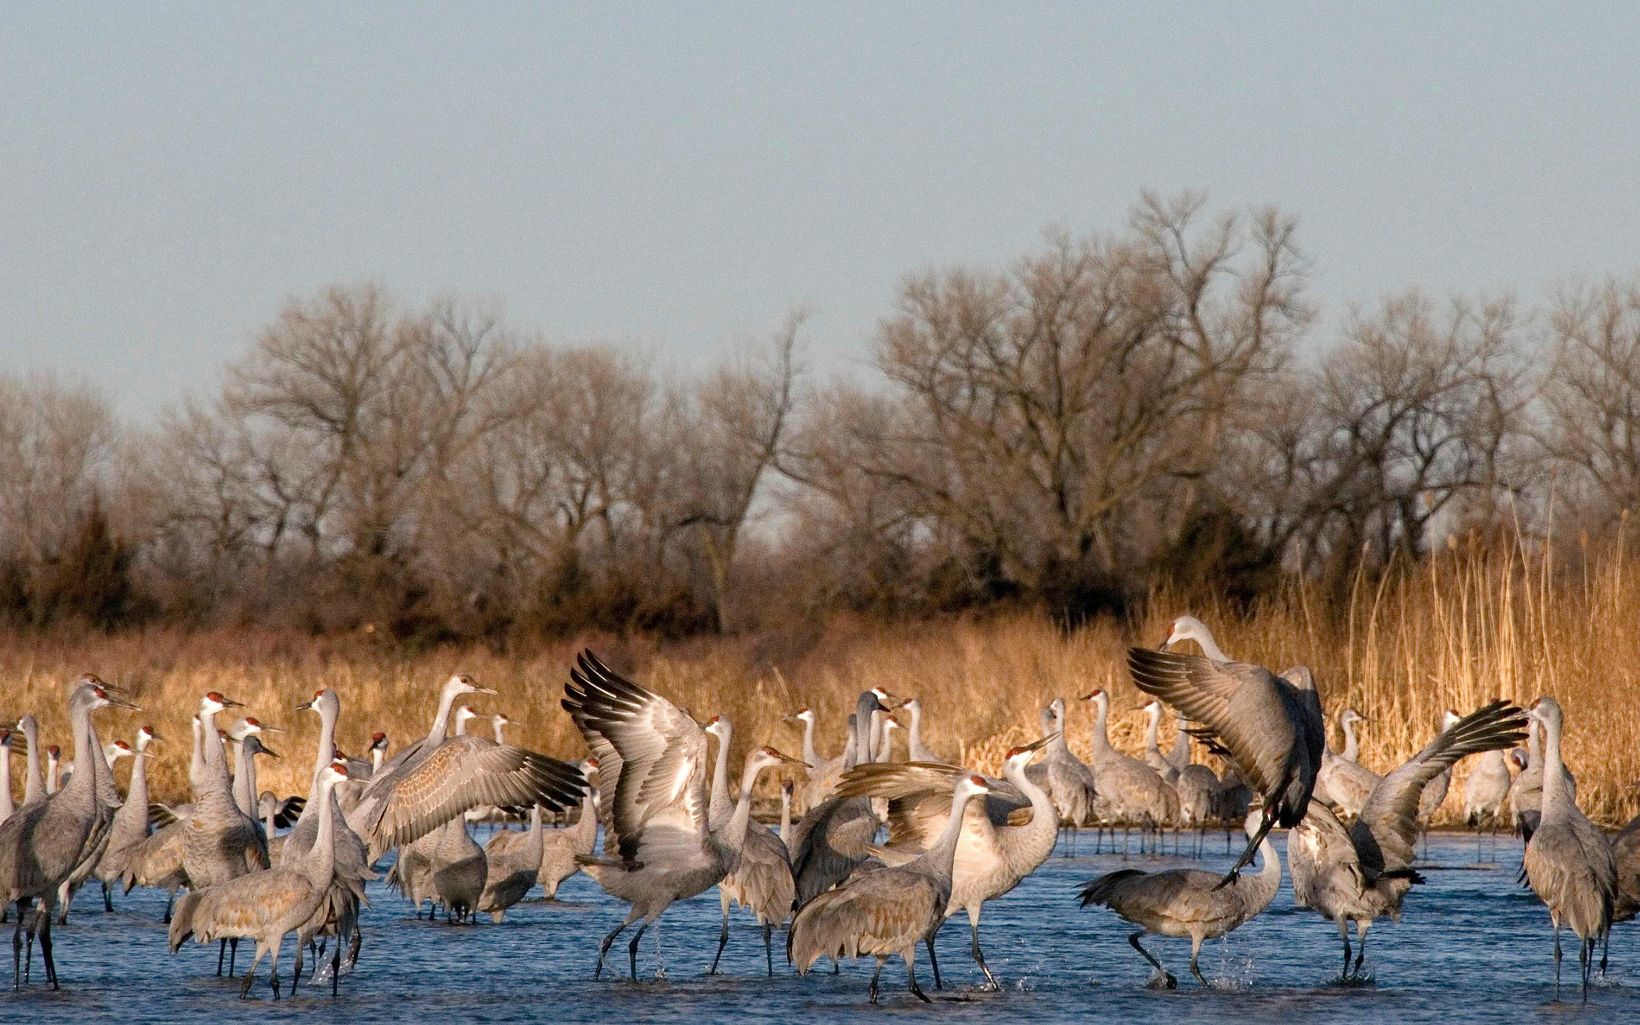 Dozens of sandhill cranes stand in shallow water.